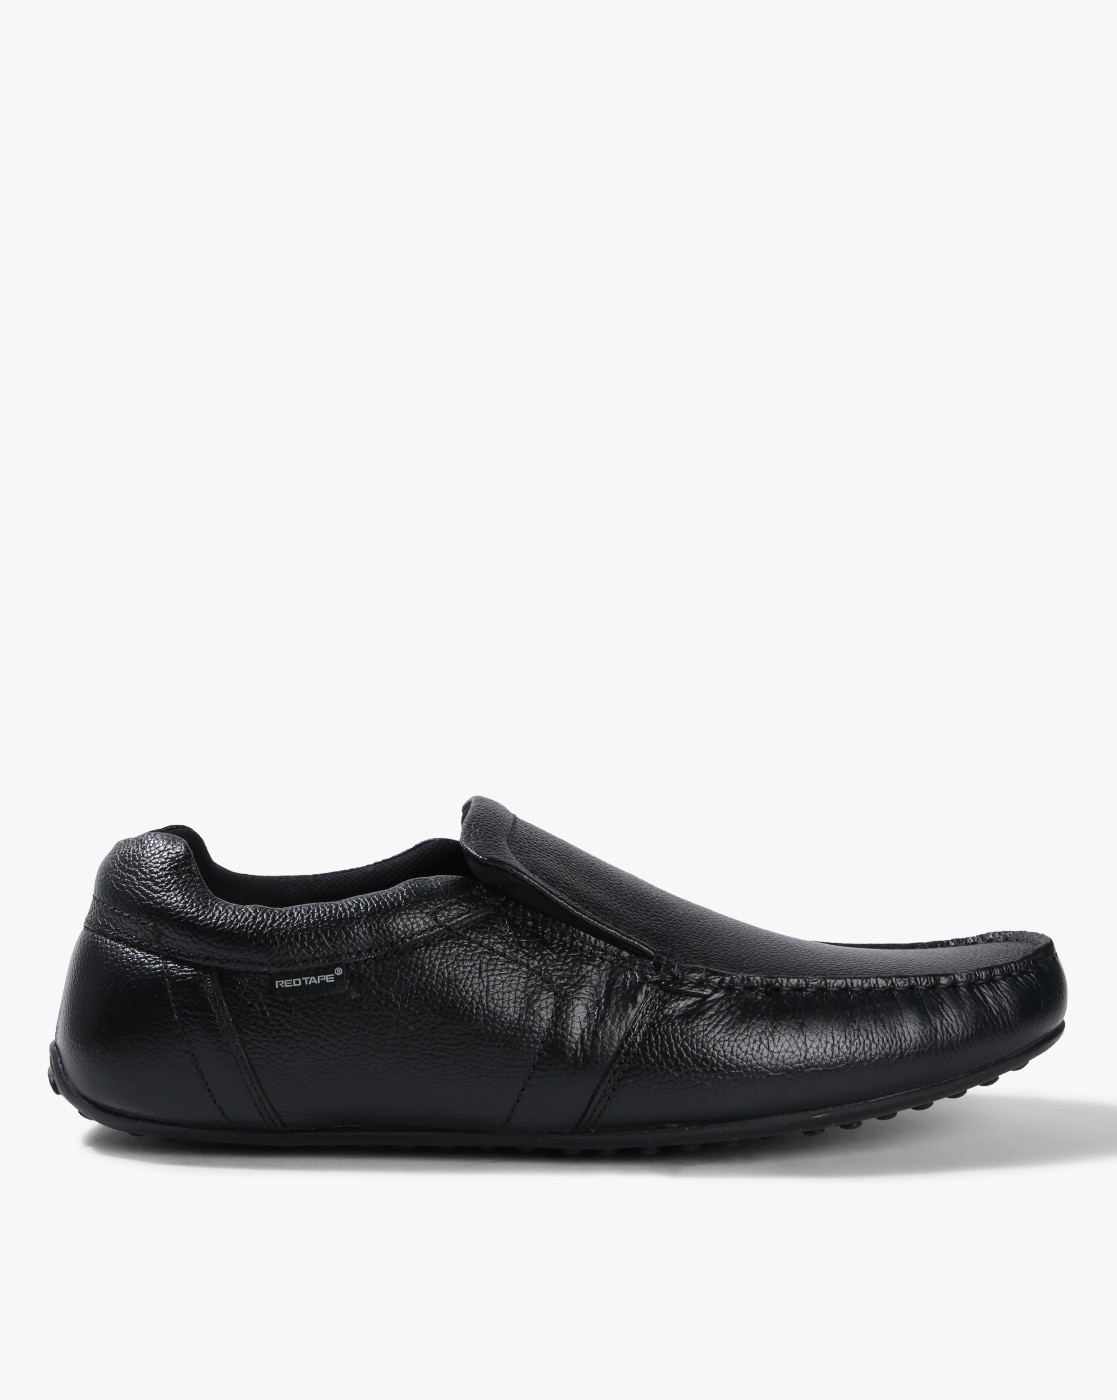 black leather formal shoes mens